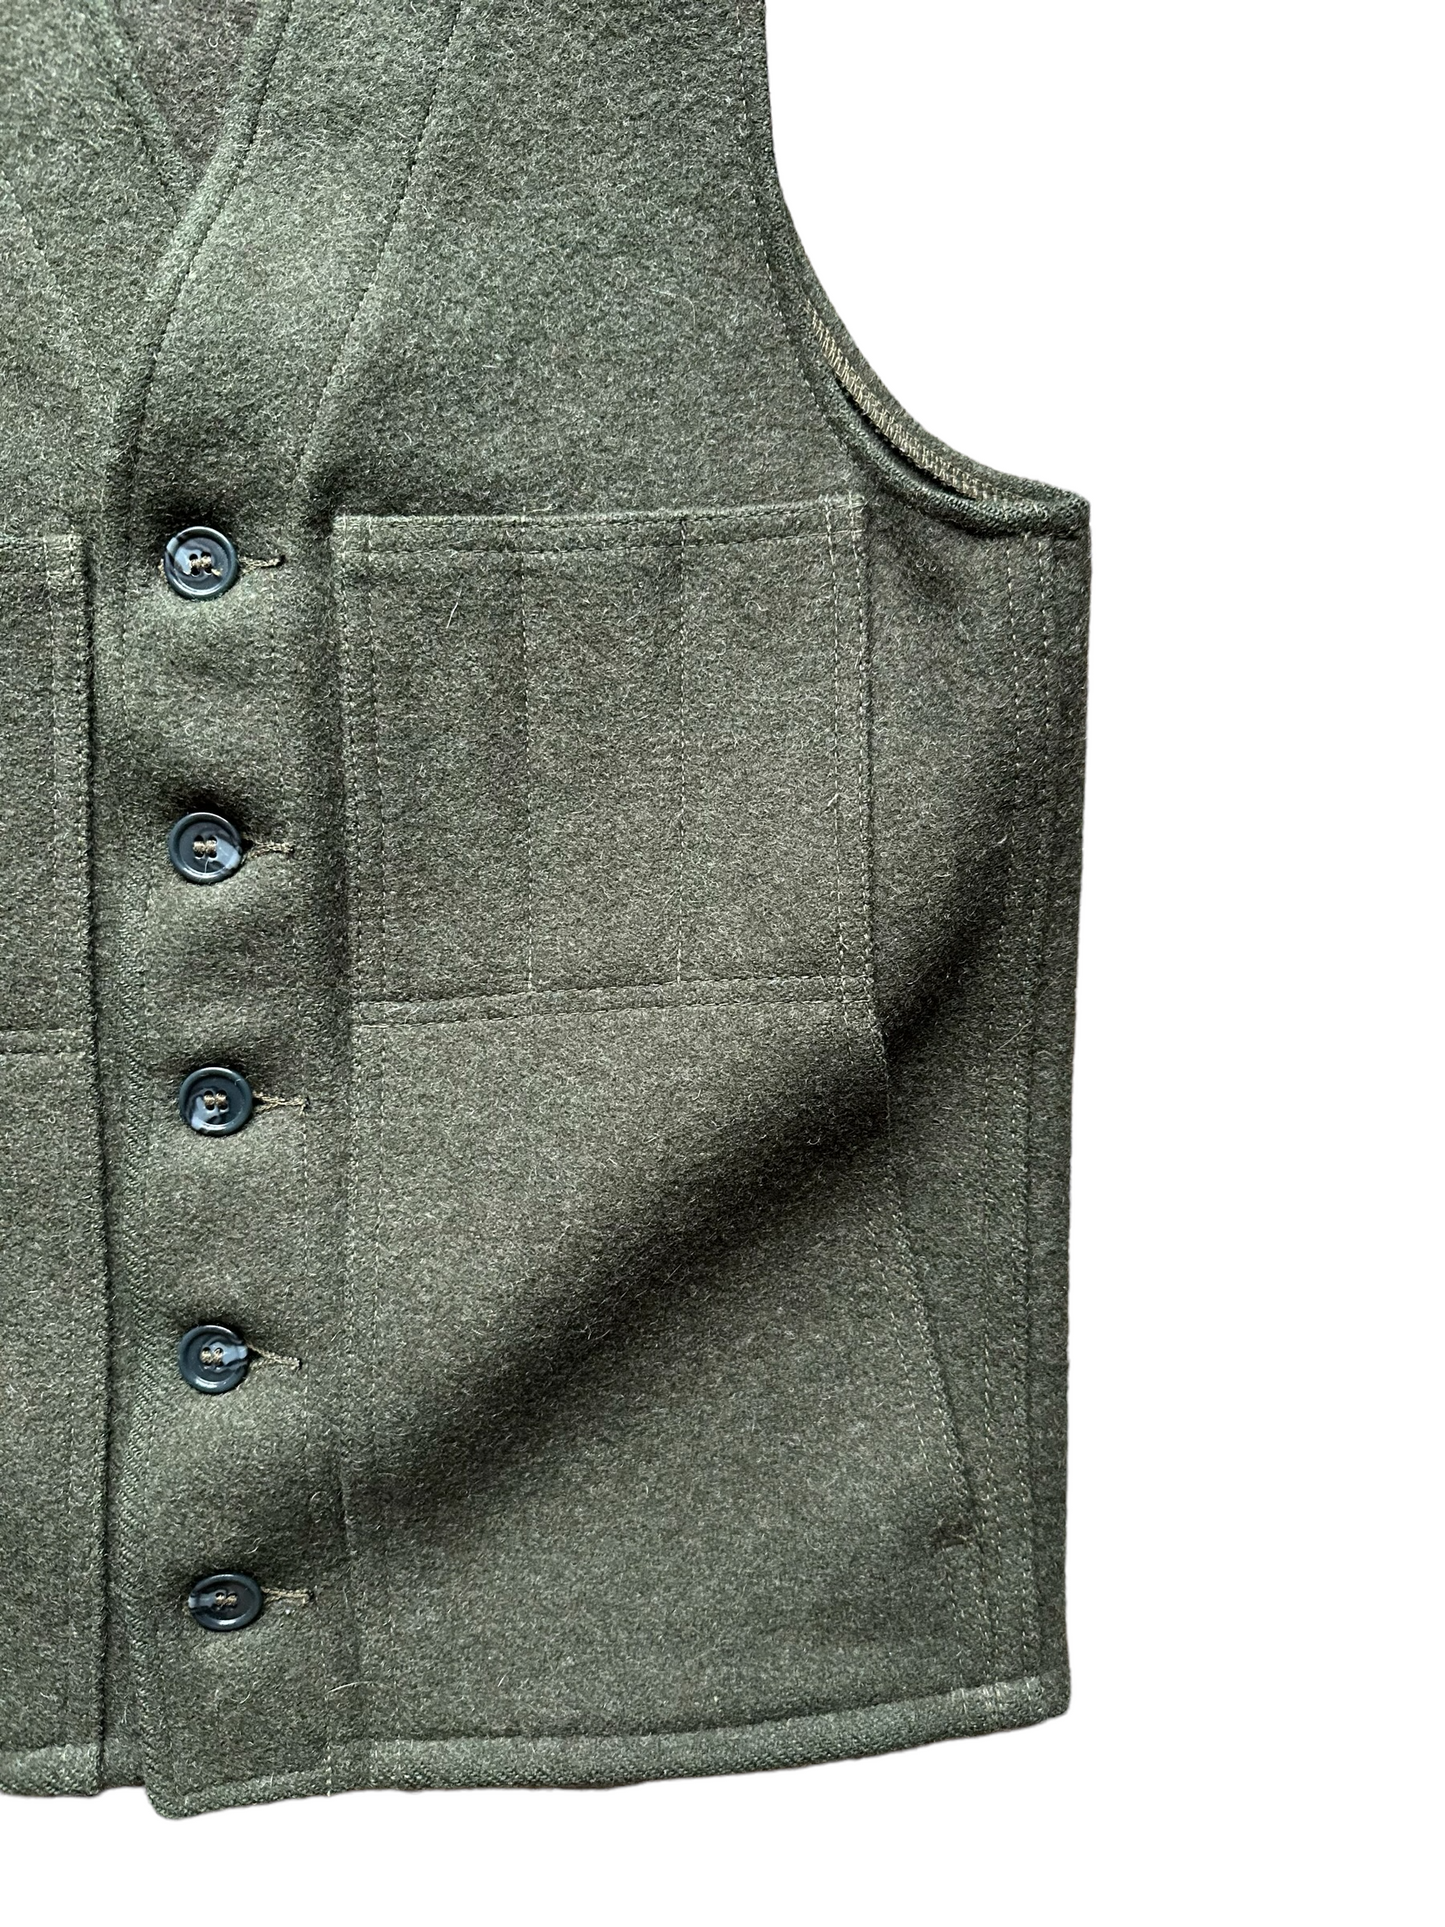 Lower Left Pocket View of Vintage Filson Mackinaw Vest SZ 36 |  Forest Green Wool Vest | Seattle Vintage Workwear